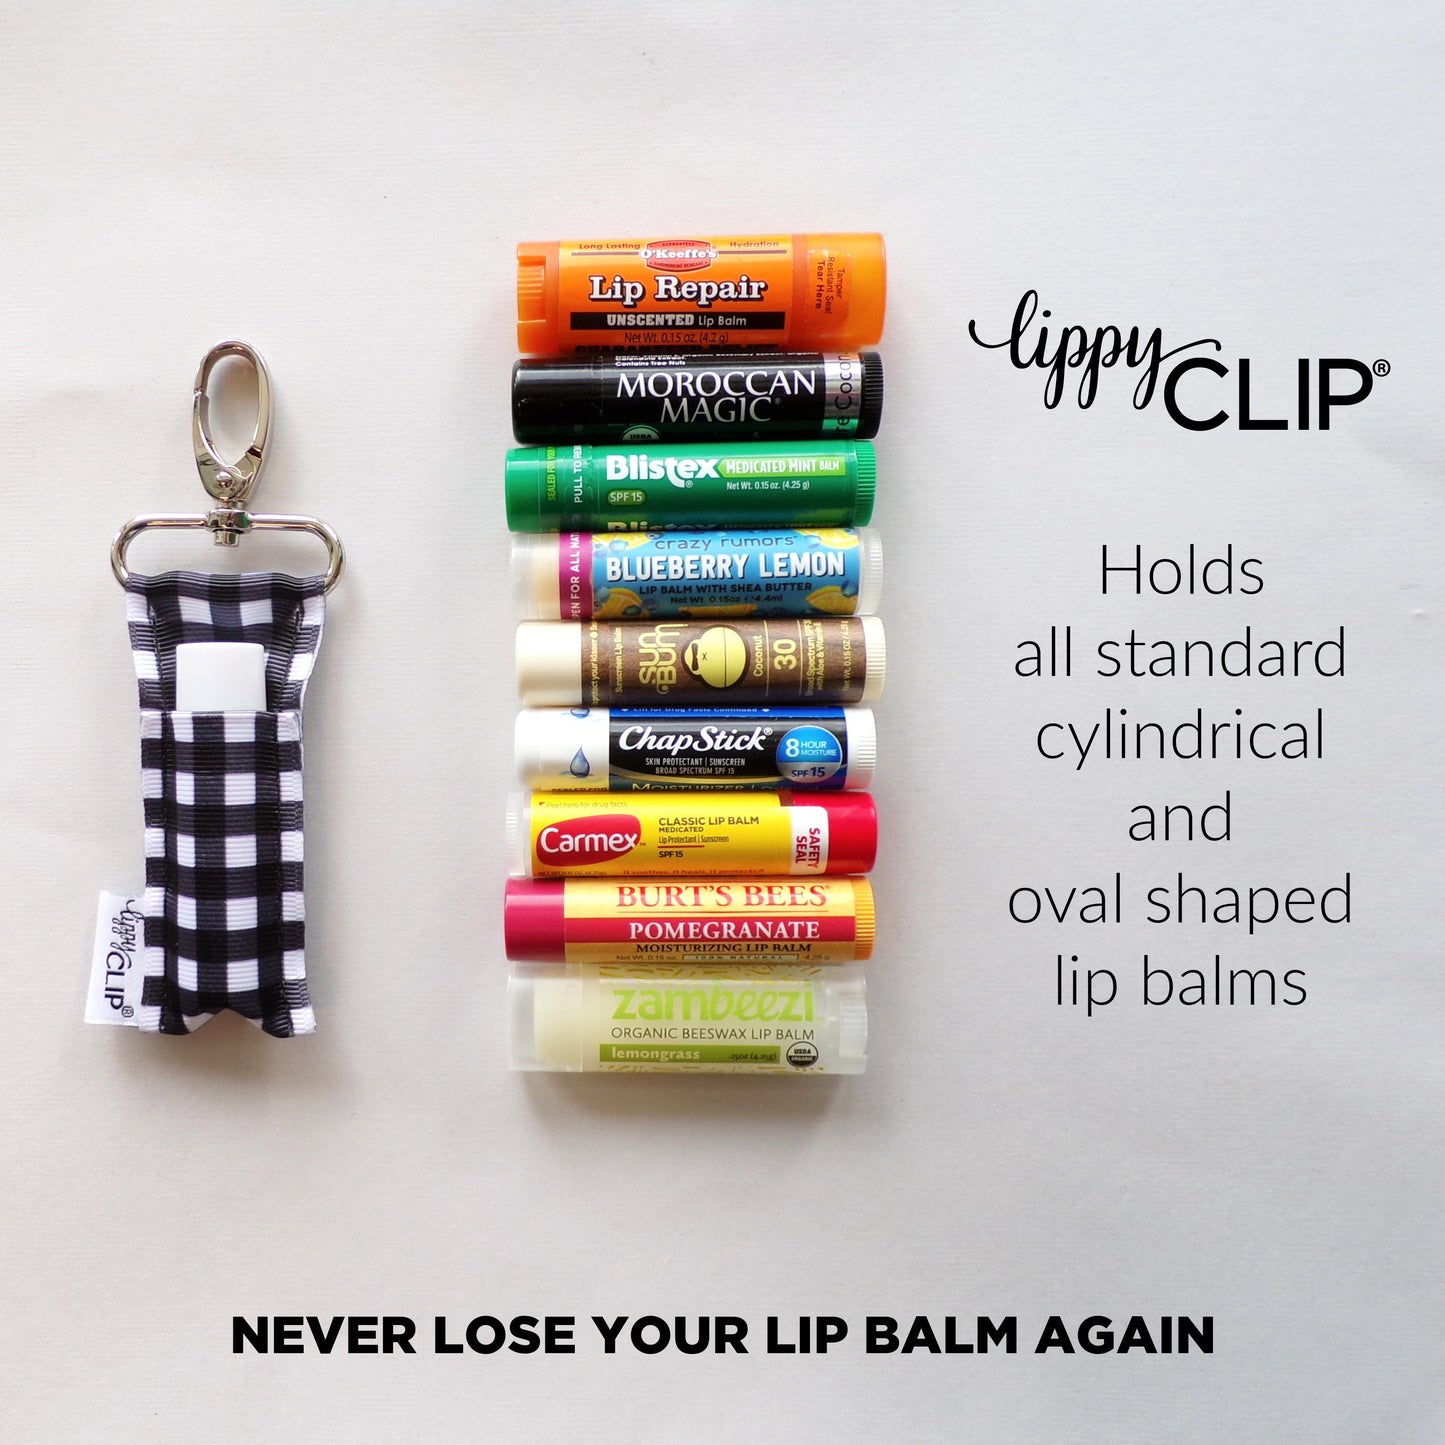 Autumn Leaves LippyClip® Lip Balm Holder